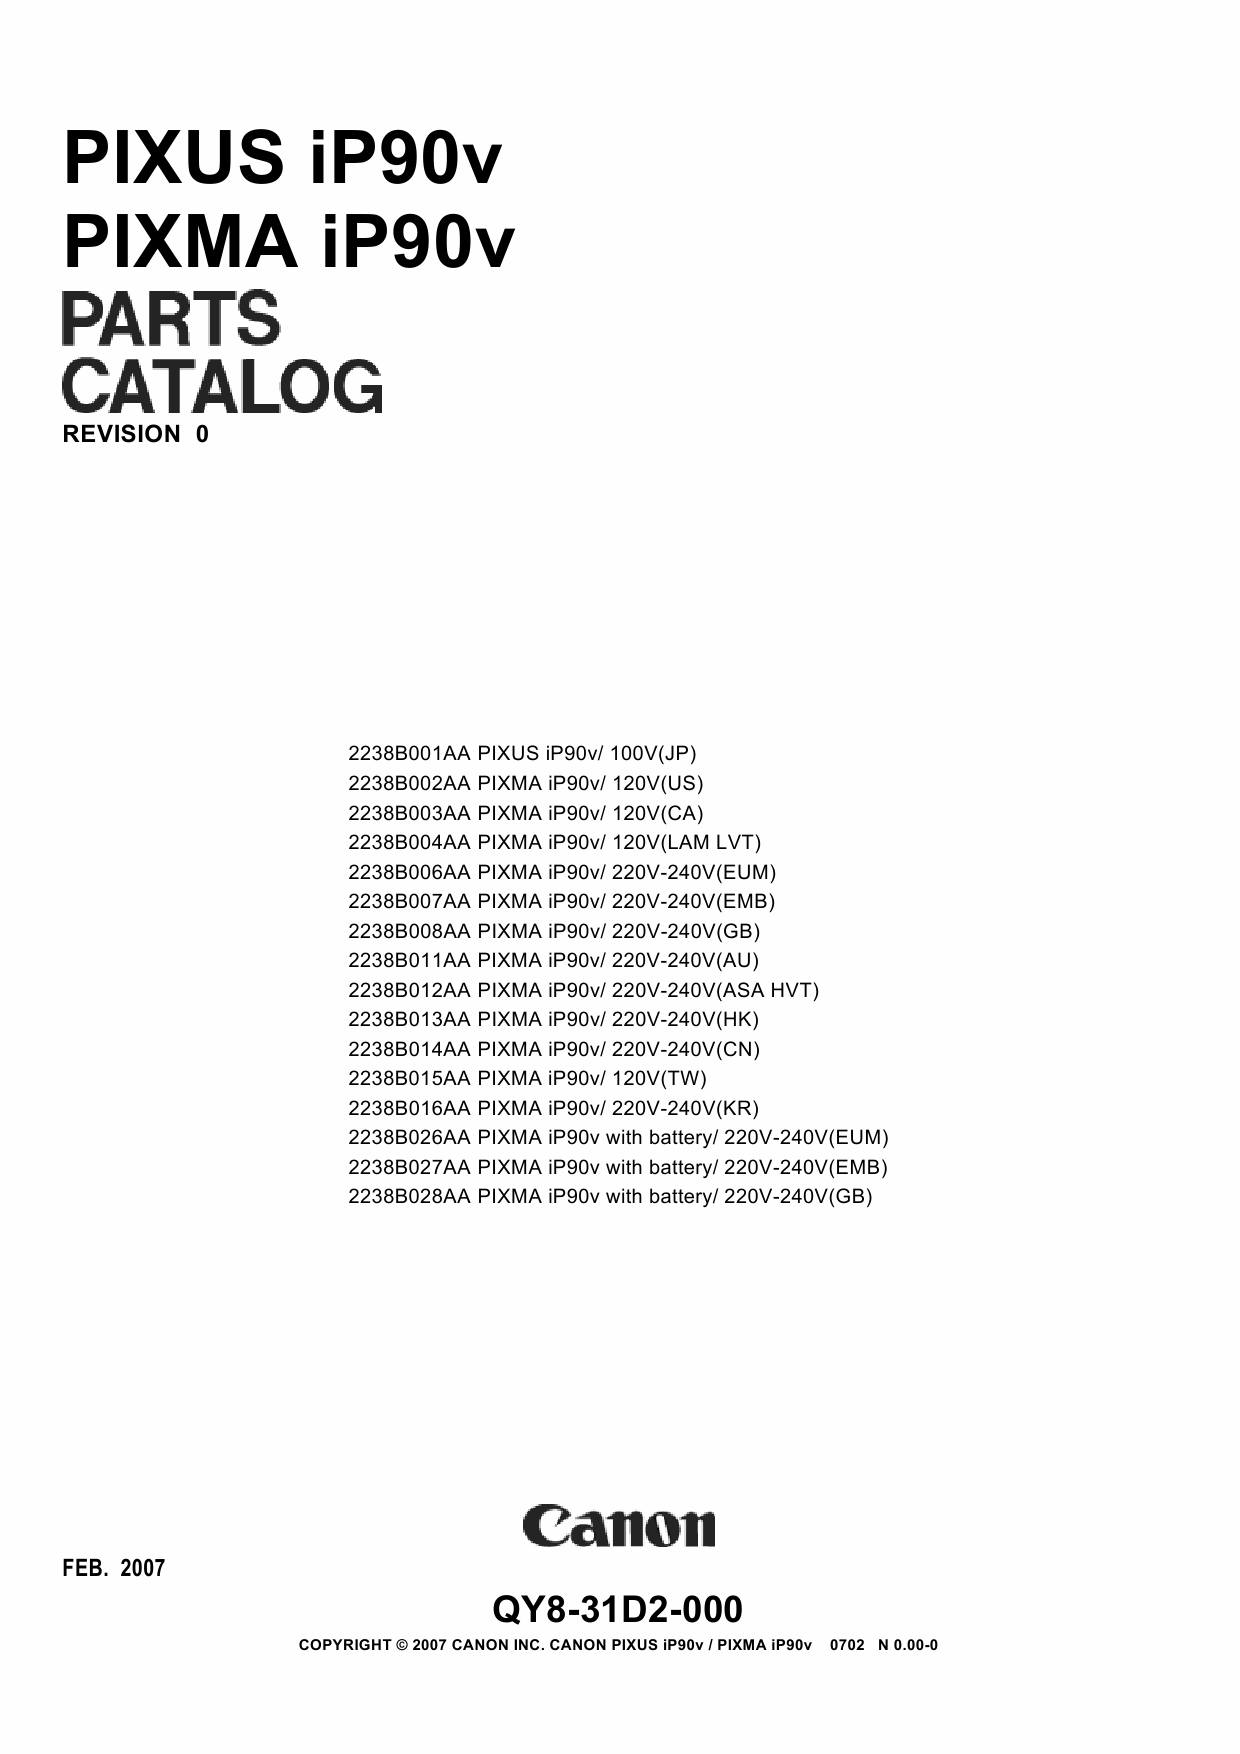 Canon PIXMA iP90v Parts Catalog Manual-1